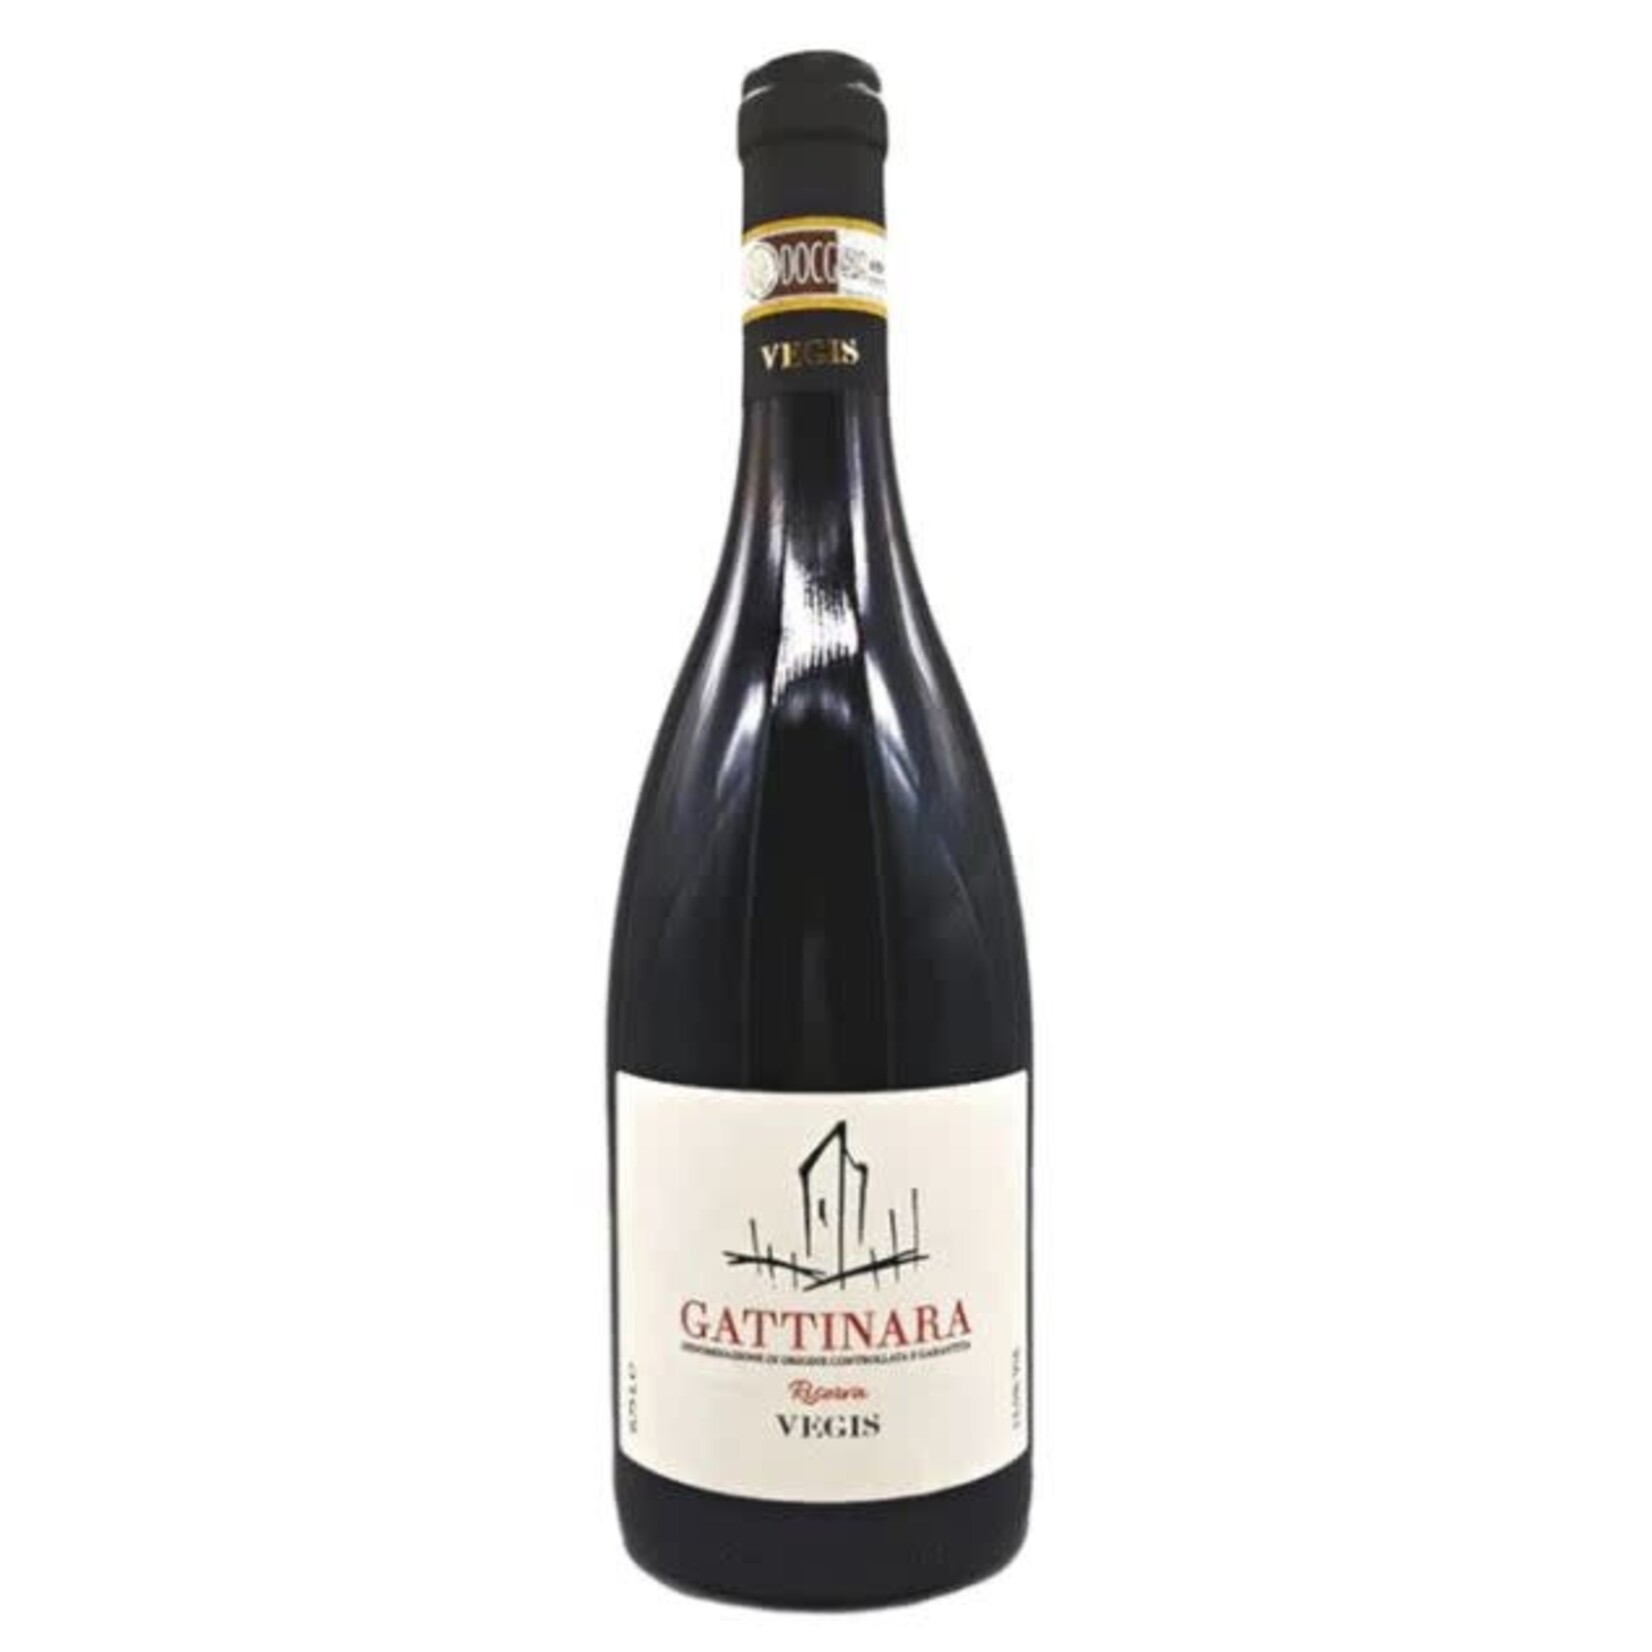 Vegis Gattinara Riserva Vegis 2015 Red Wine 100% Nebbiolo   Italy